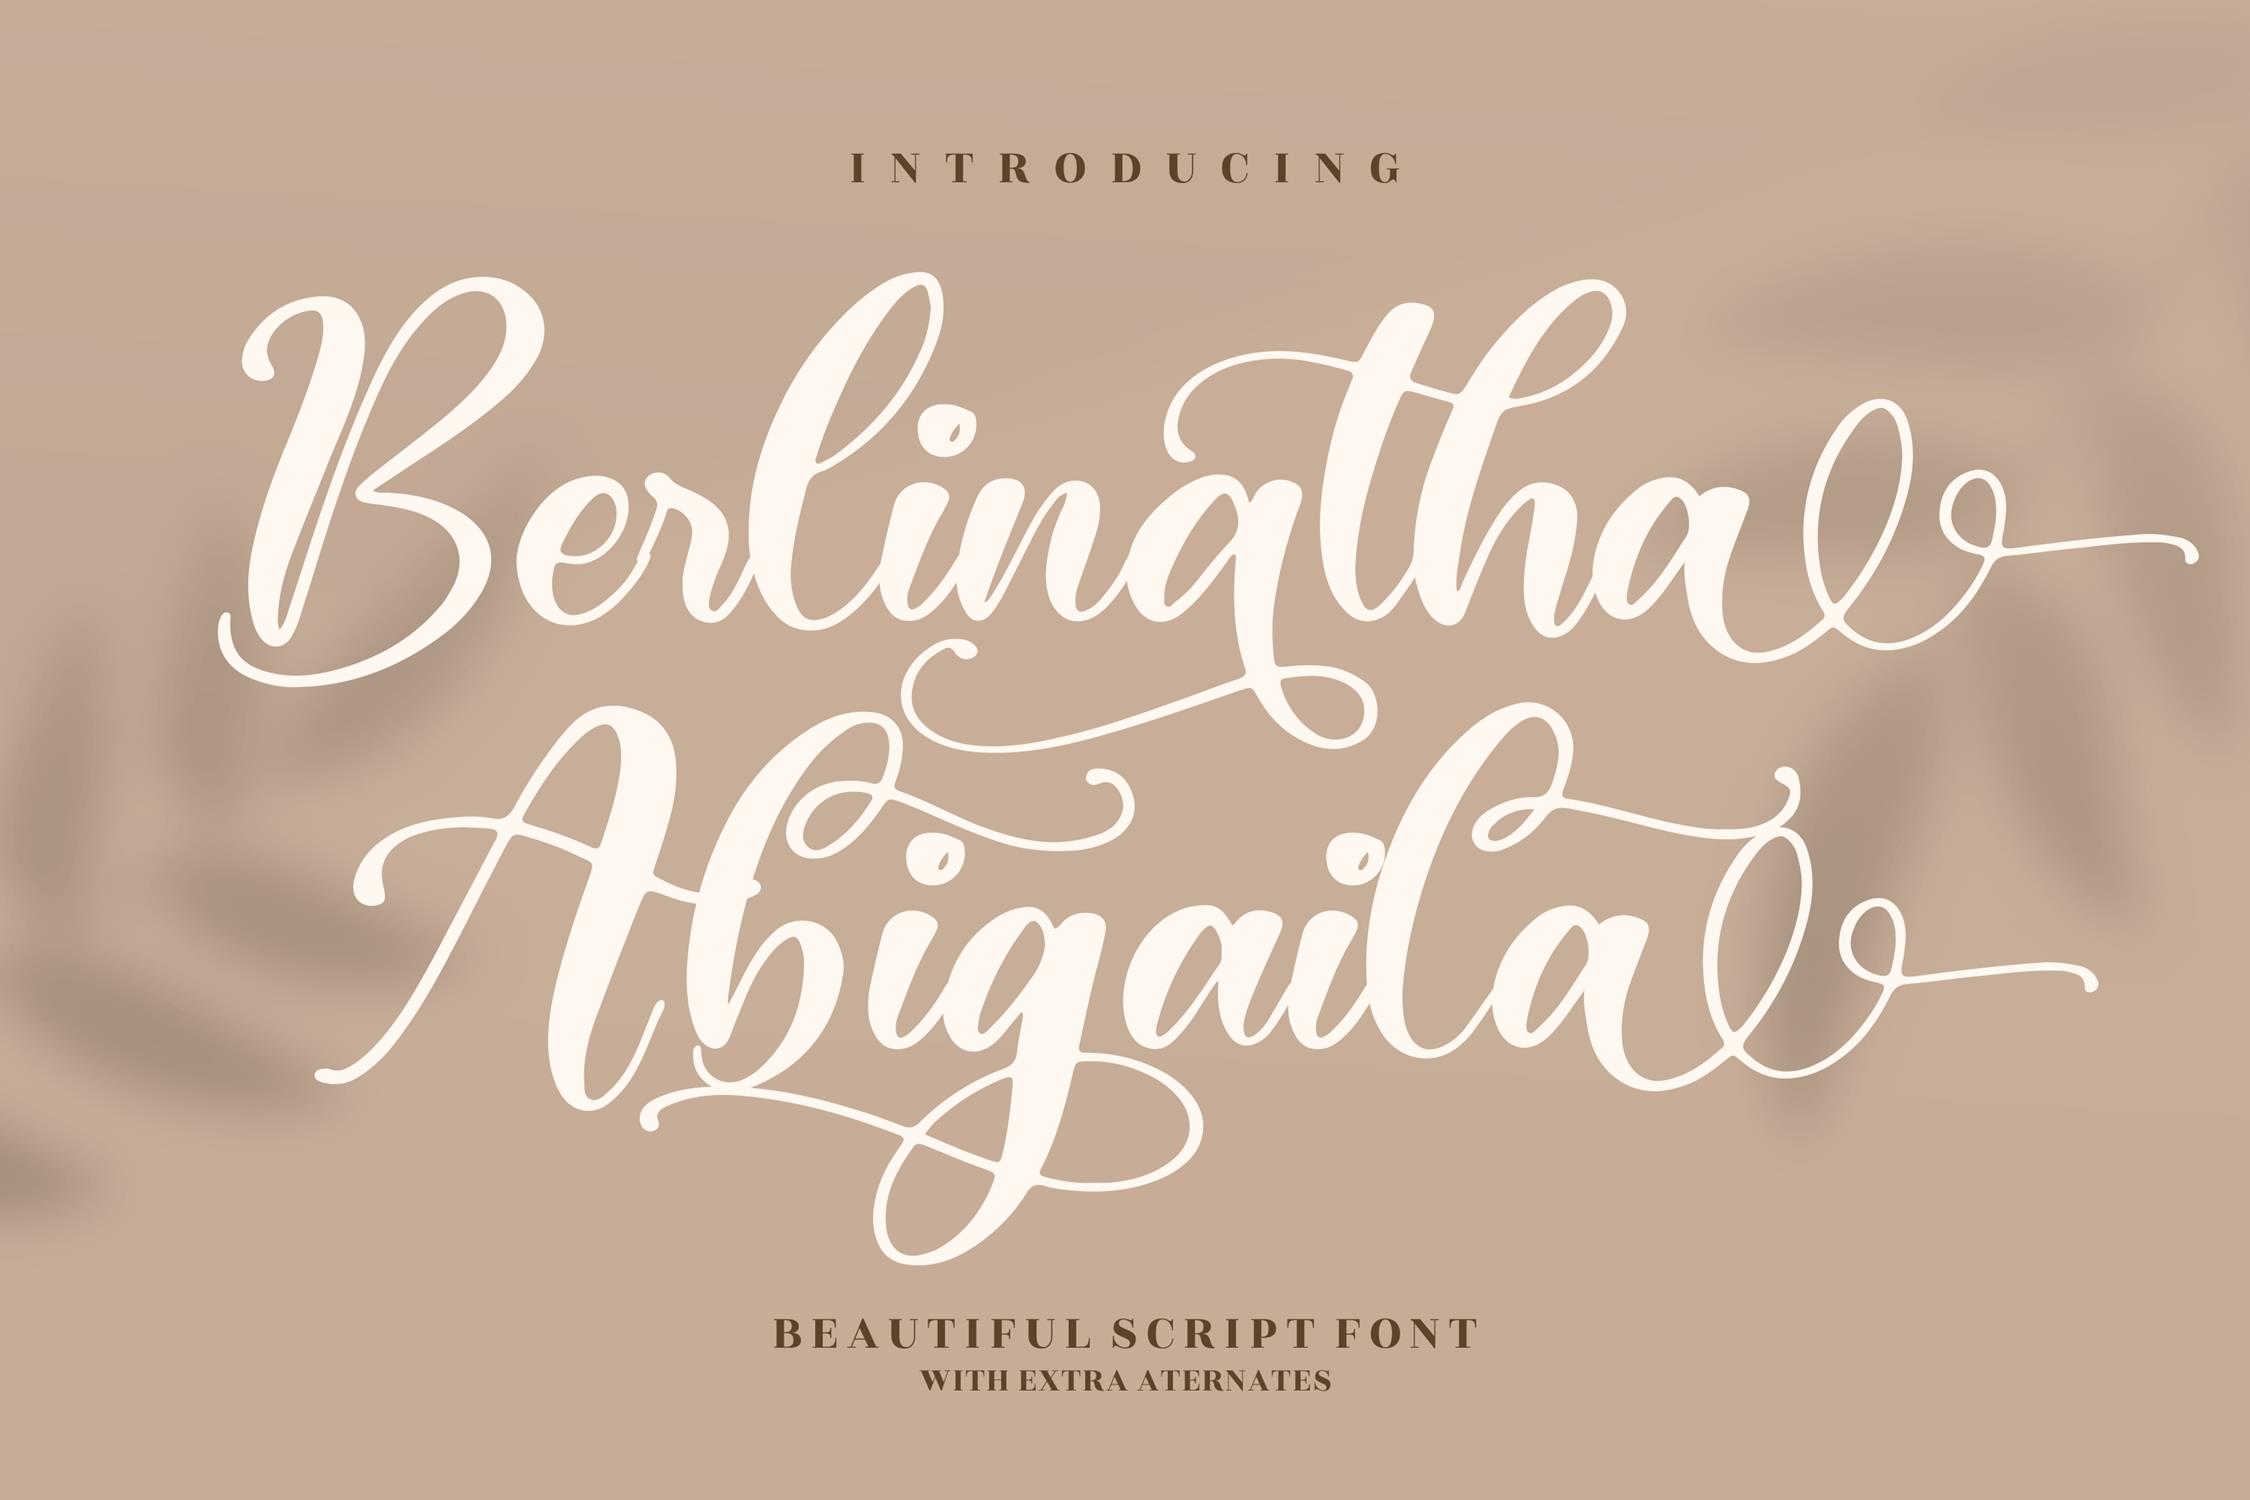 Berlinatha Abigaila